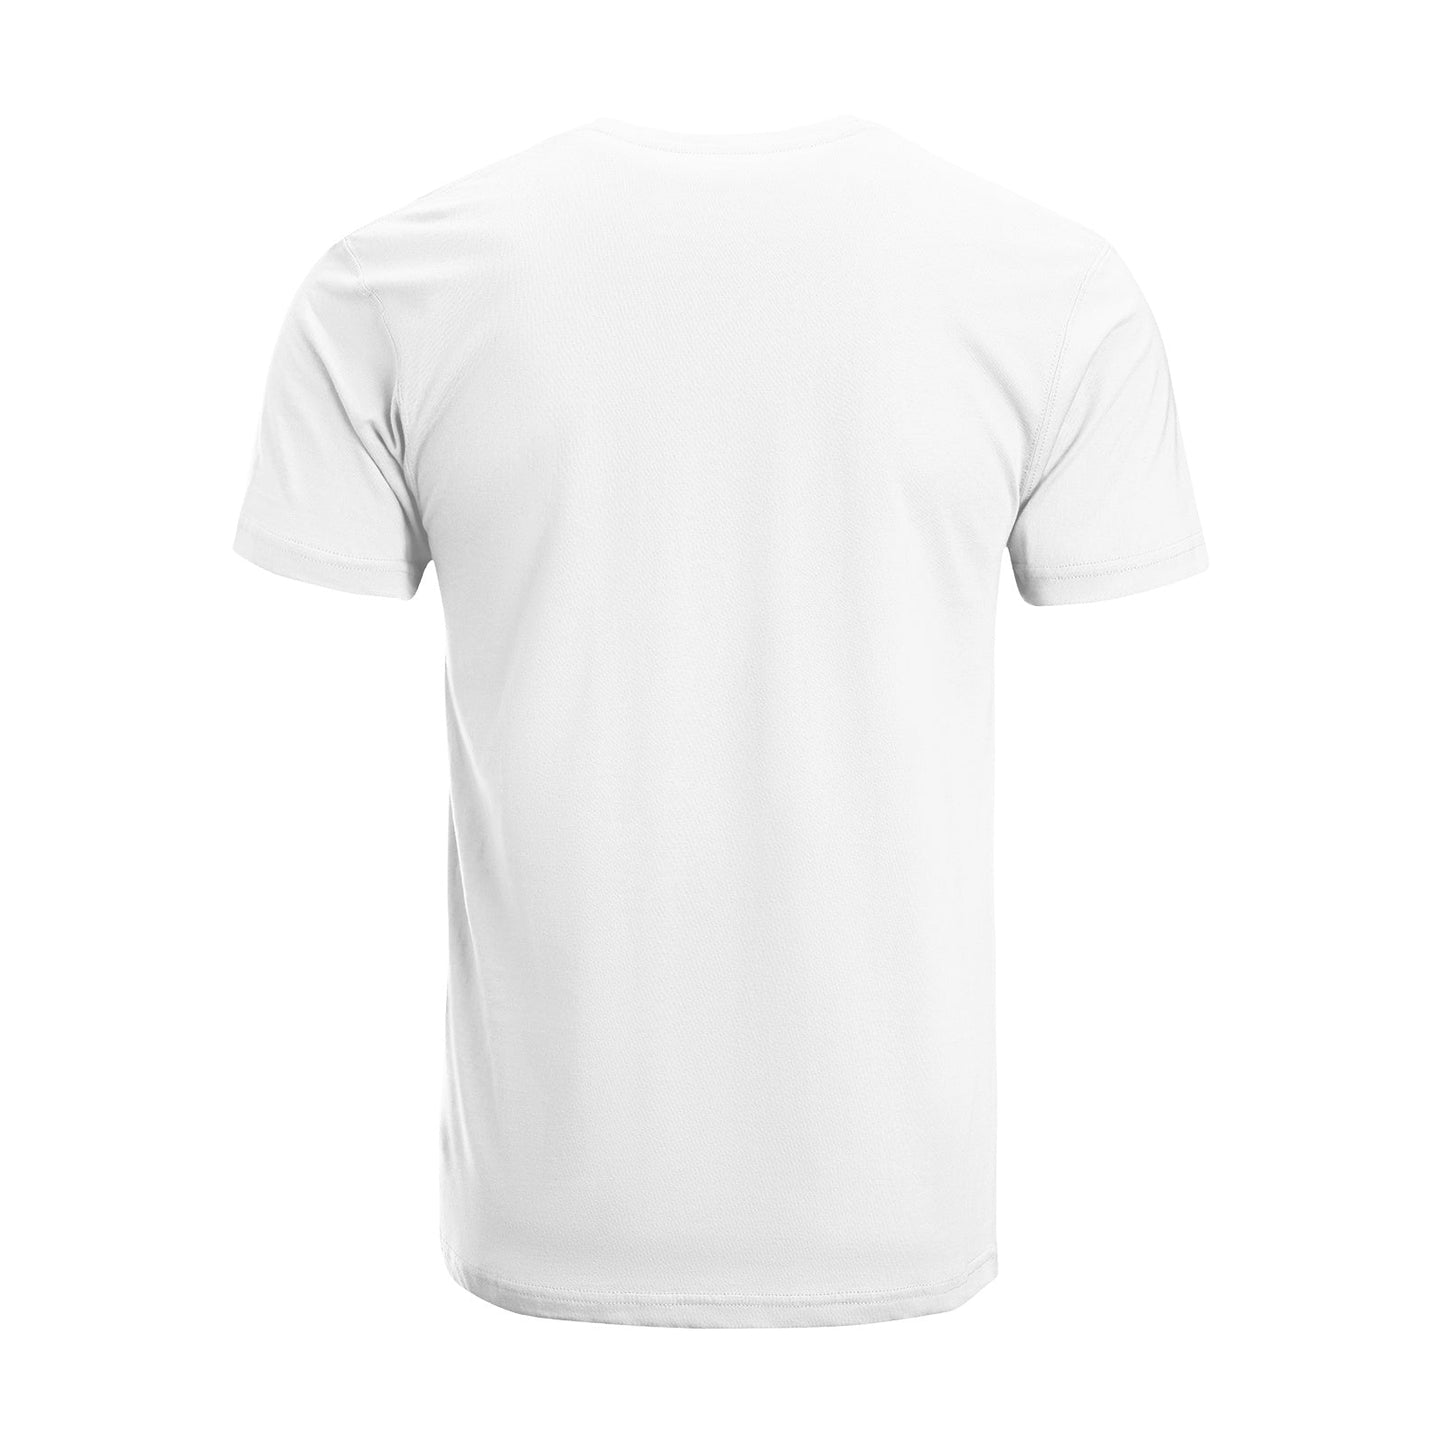 Unisex Short Sleeve Crew Neck Cotton Jersey T-Shirt CAT 23 - Tara-Outfits.com